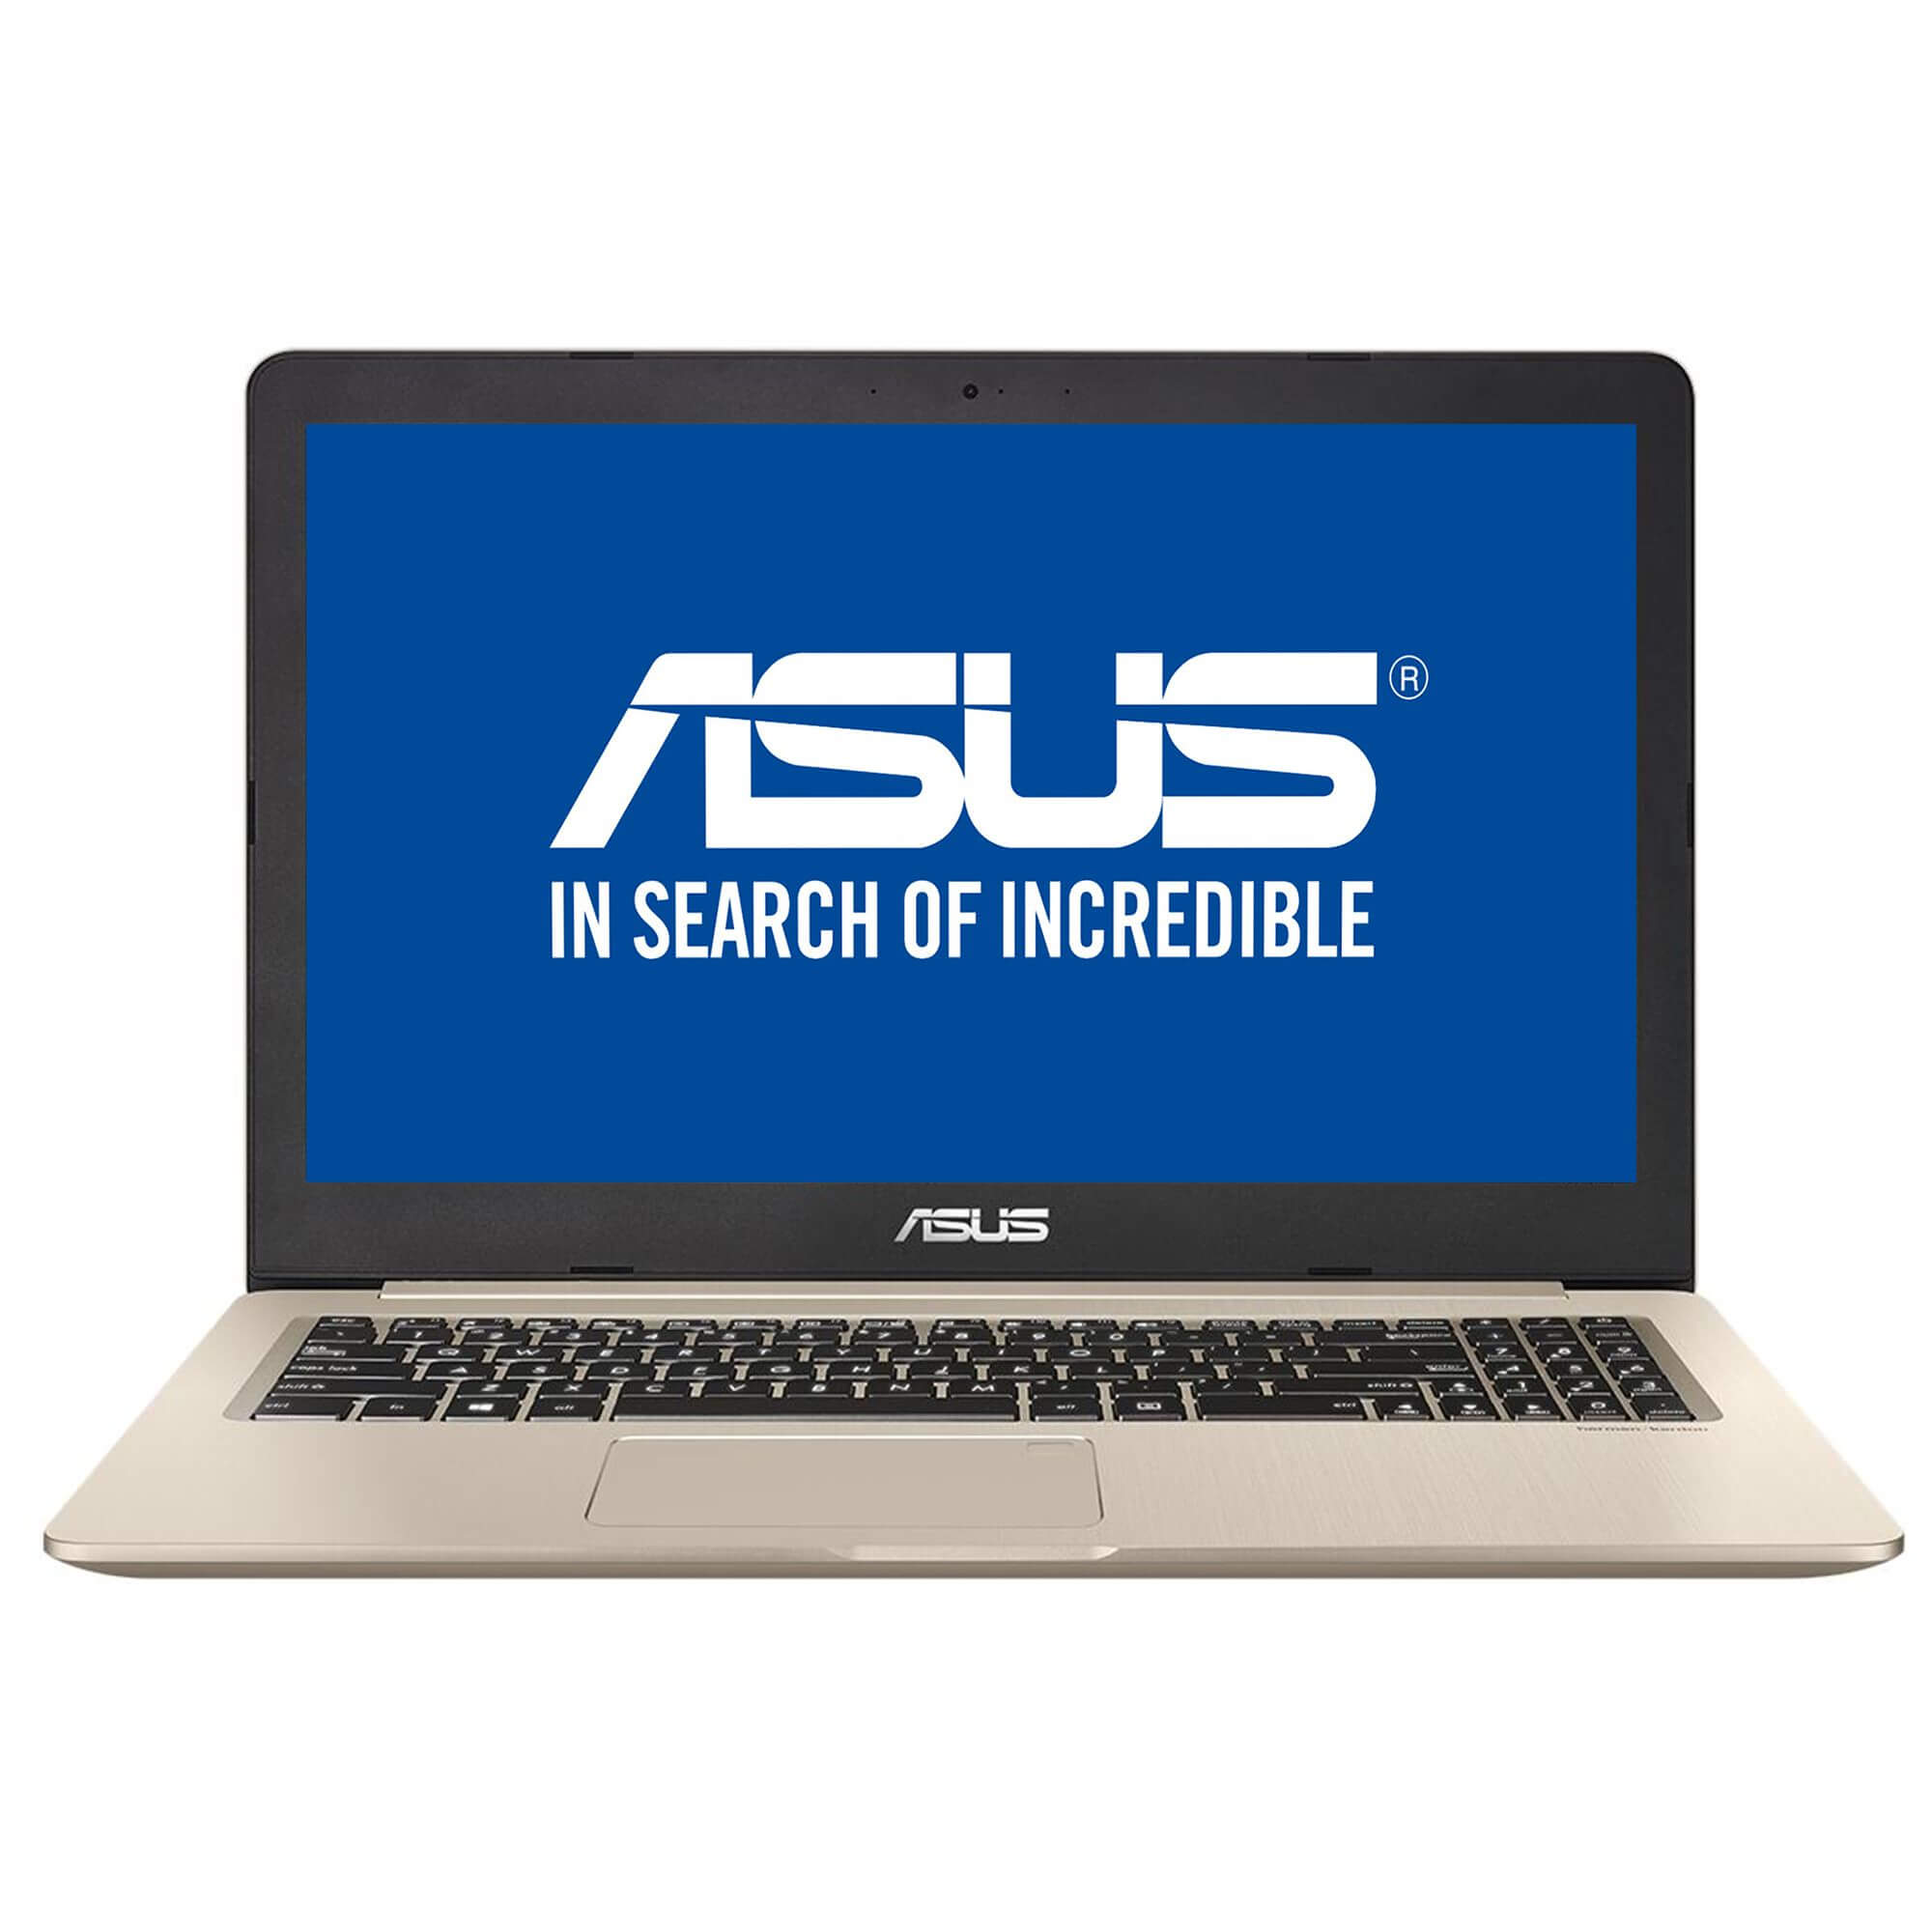 Laptop Asus Pro 15 N580VD-DM291, Intel Core i5-7300HQ, 4GB DDR4, HDD 500GB + SSD 128GB, nVidia GeForce GTX 1050 2GB, Endless OS